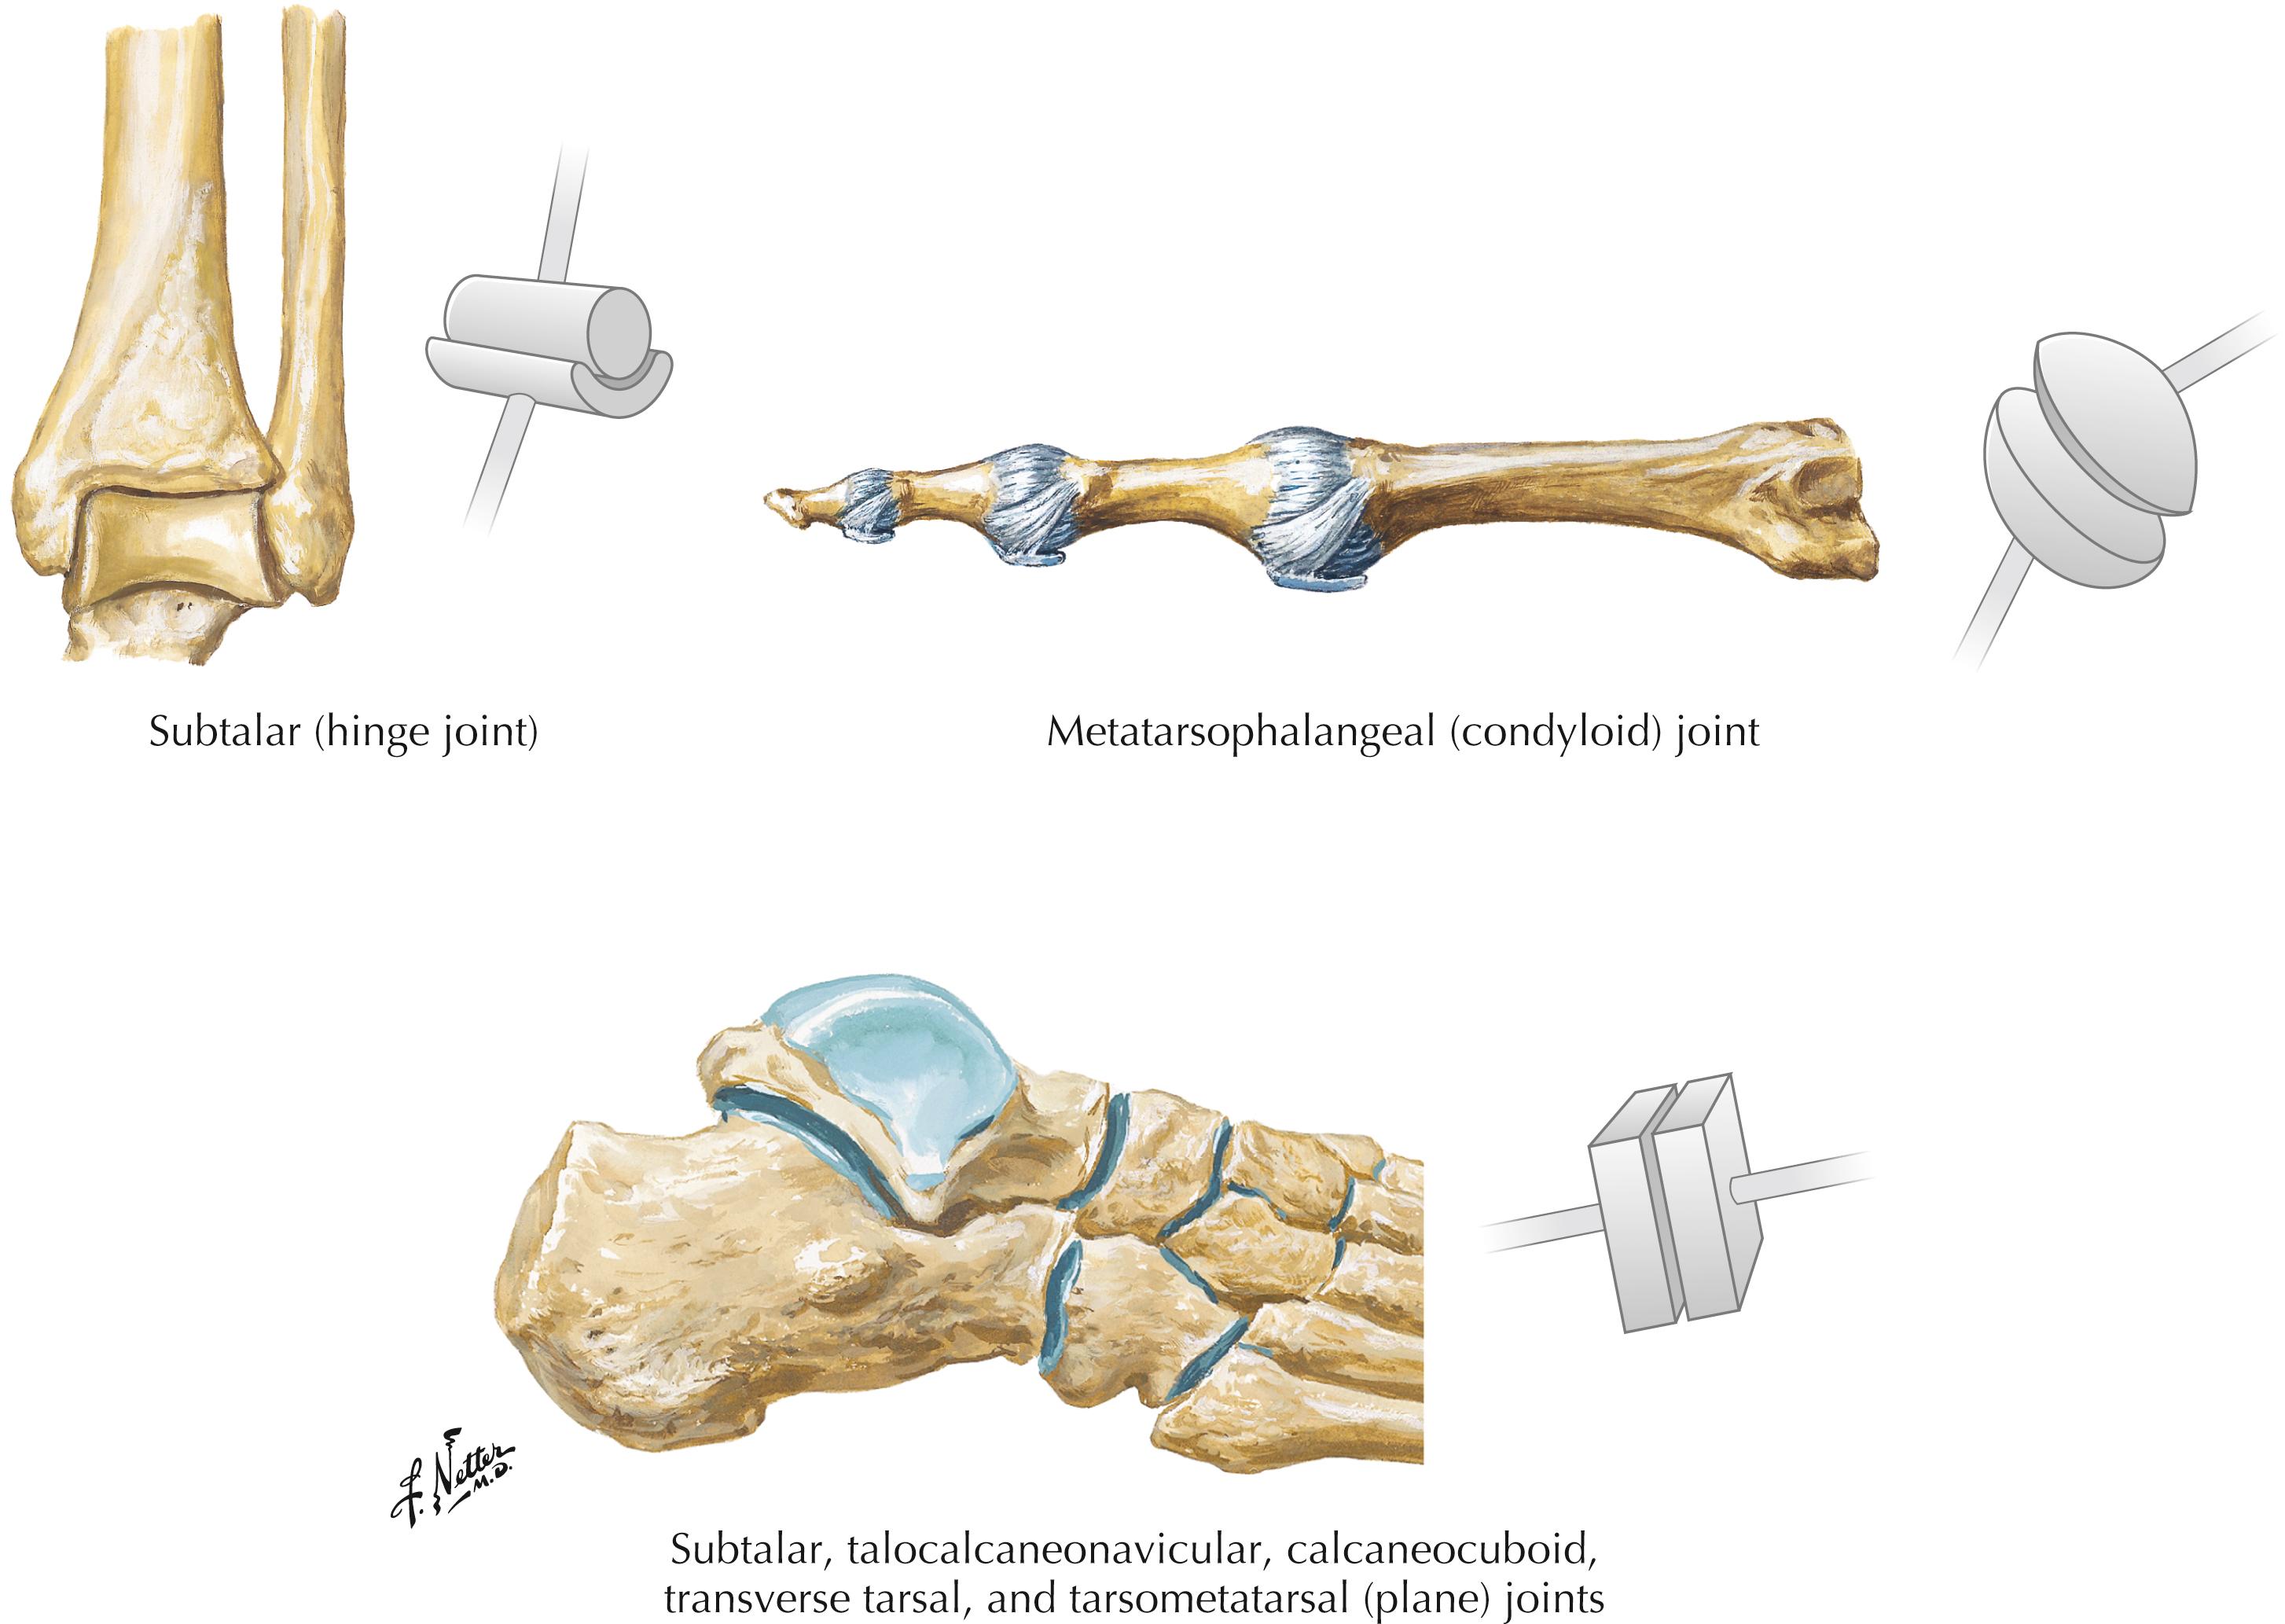 Figure 8-3, Talocrural (hinge) joint.